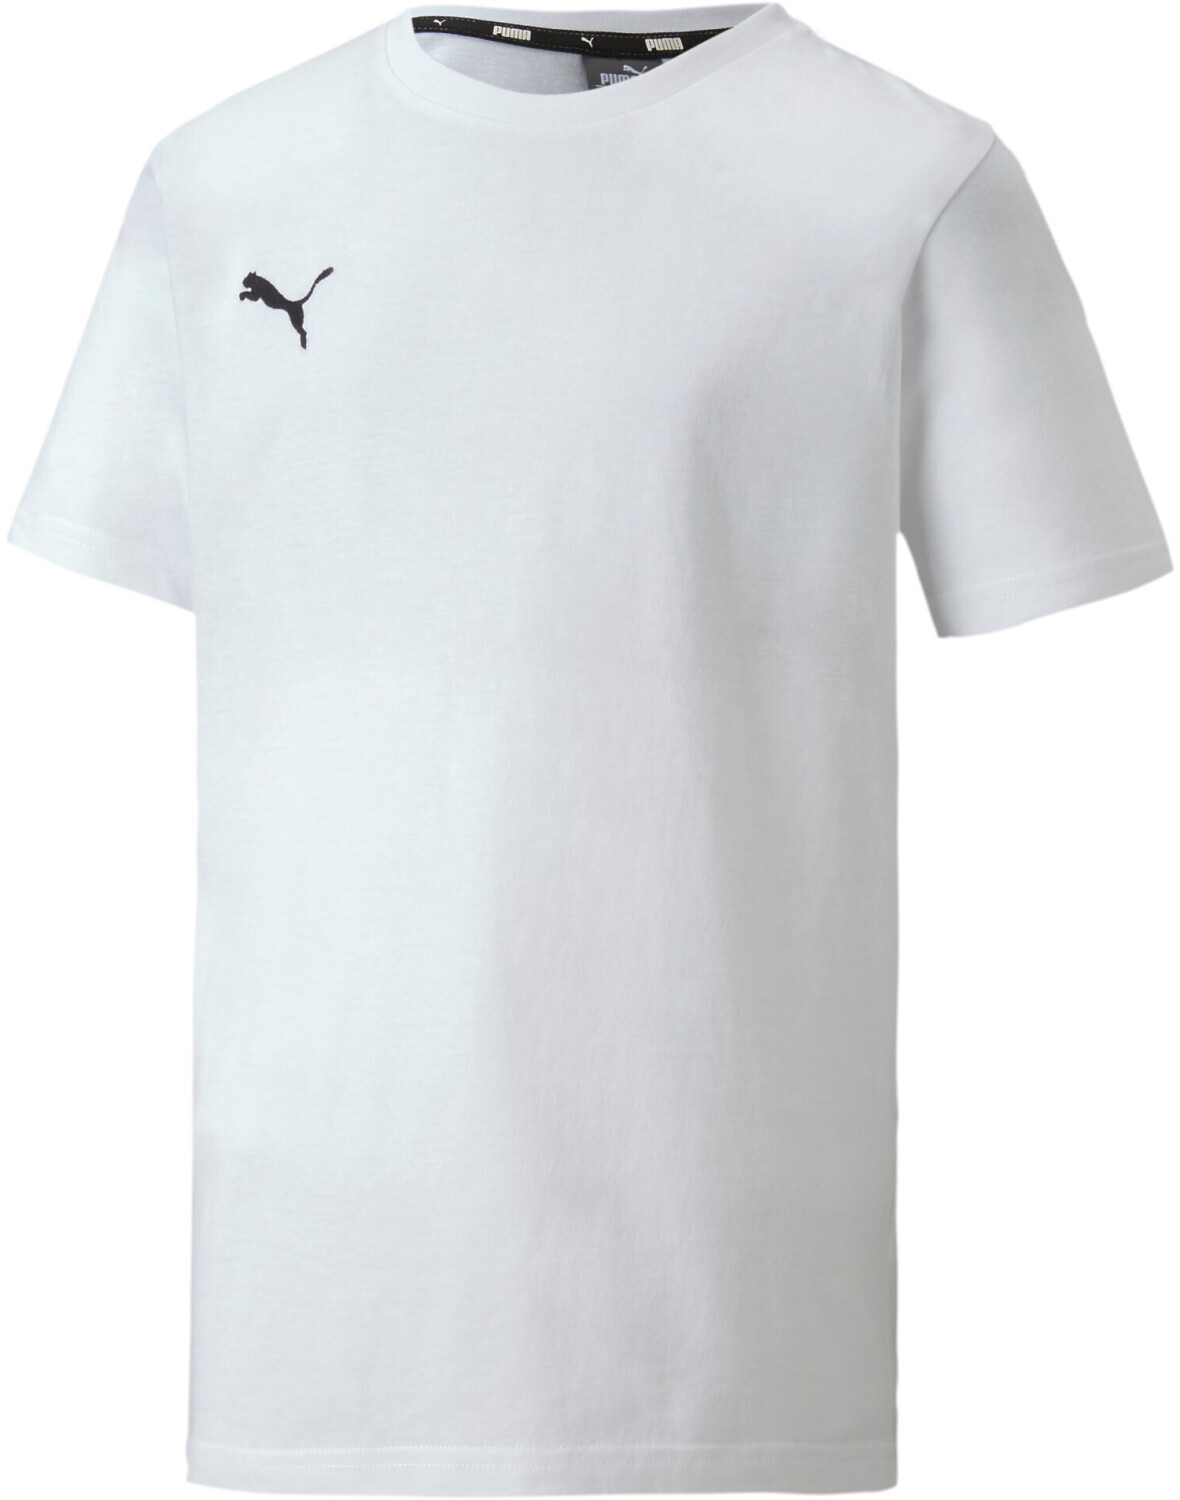 Puma Kinder T-Shirt Casuals Tee (656709-04) white